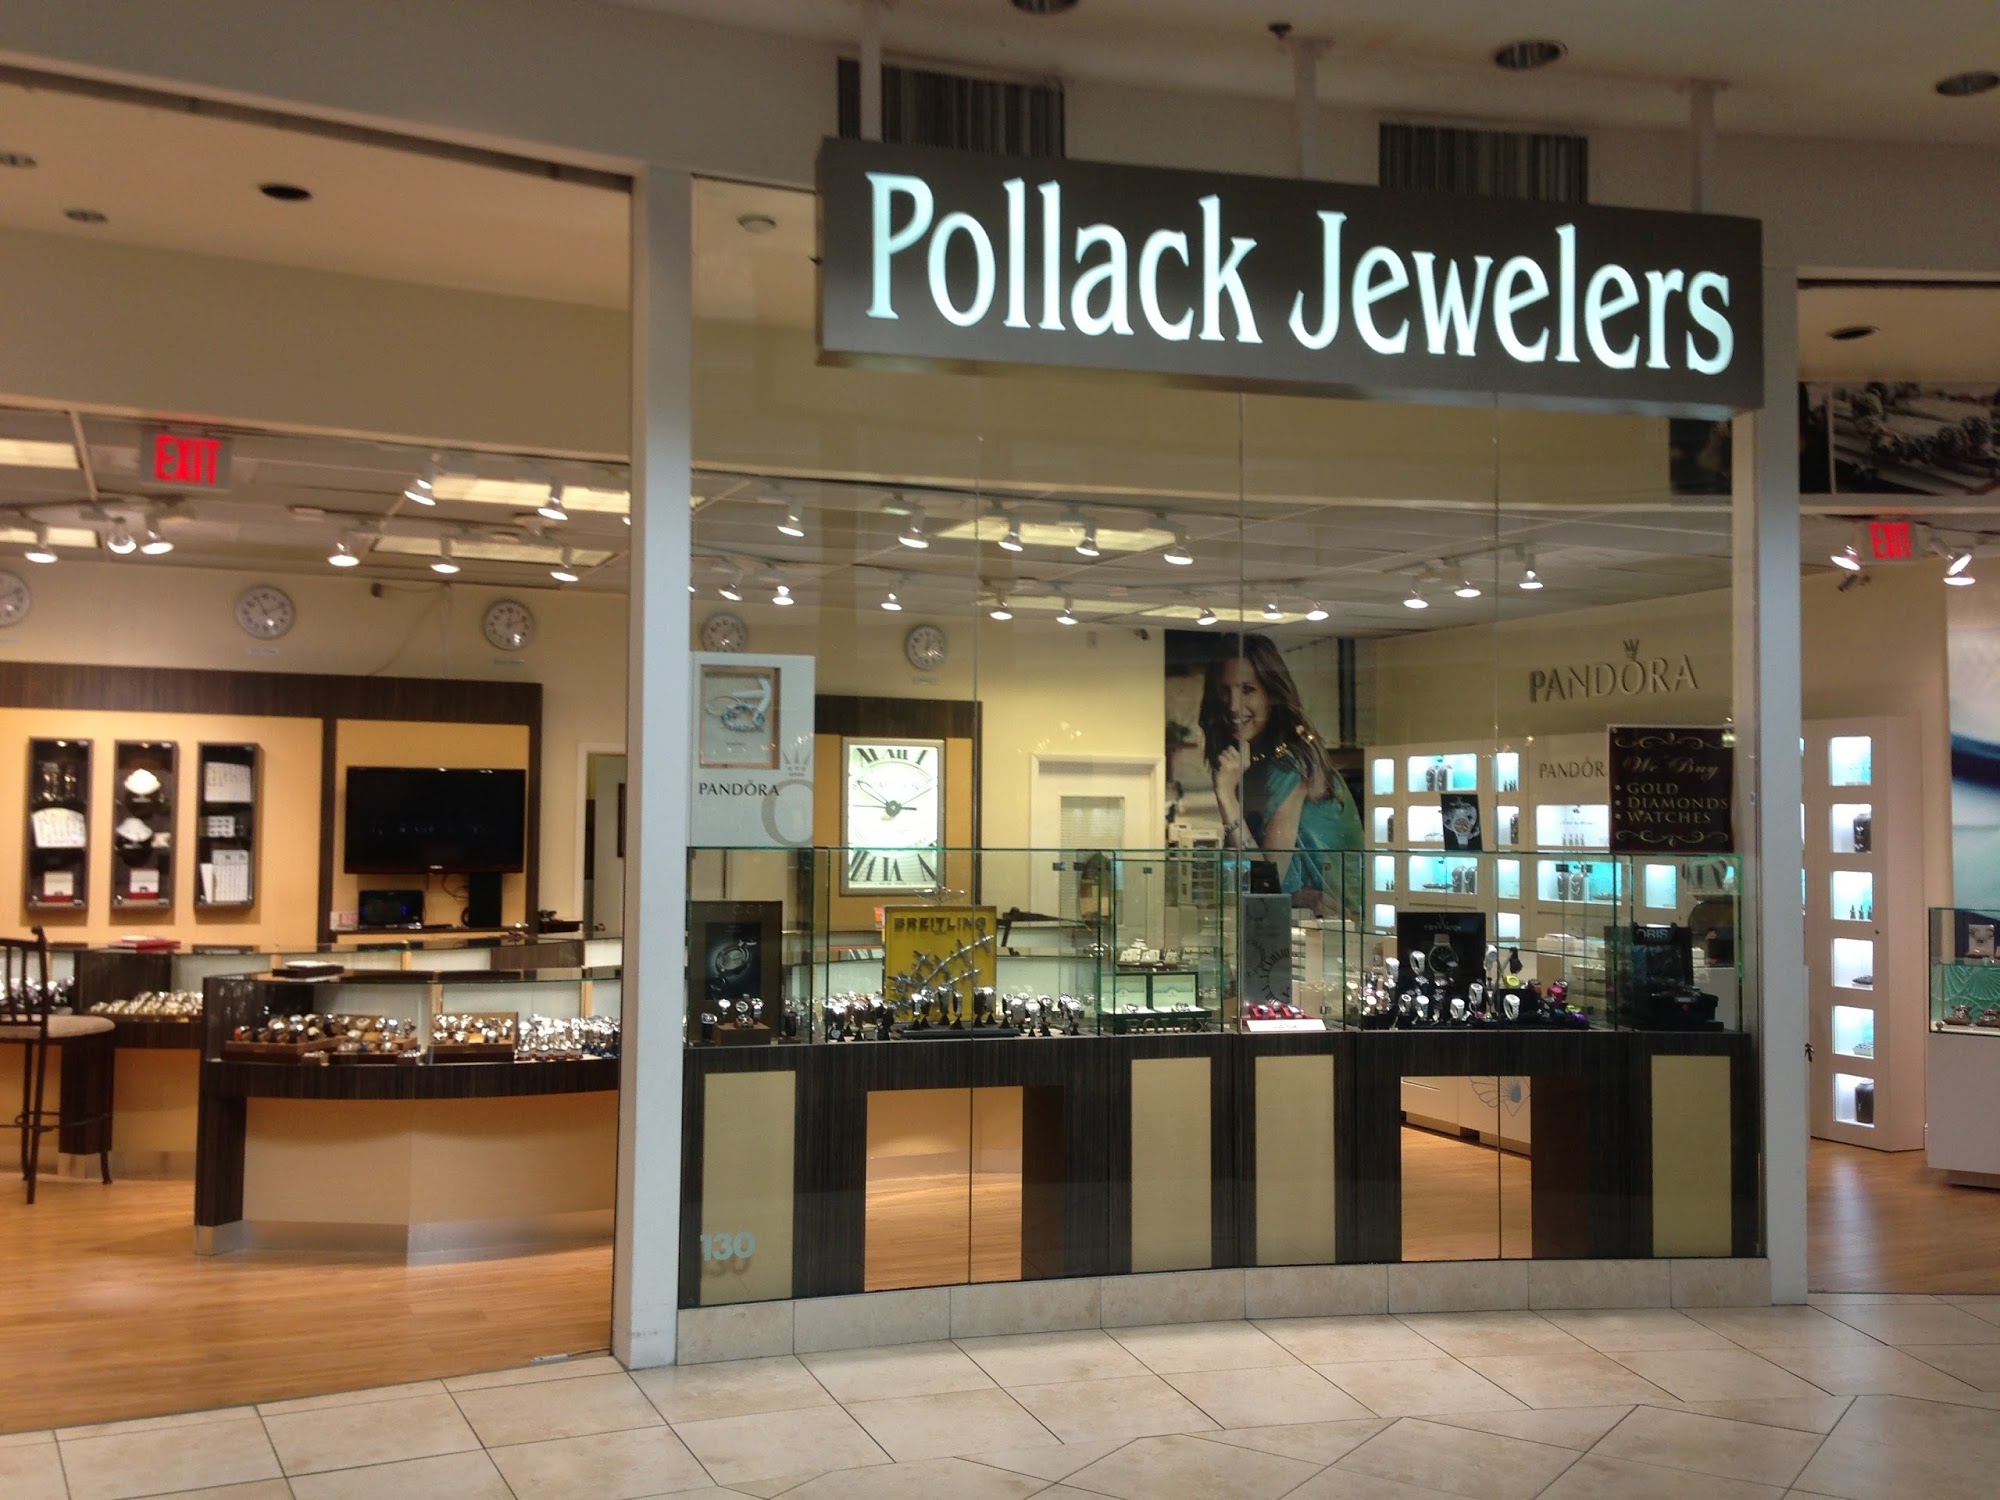 Pollack Jewelers